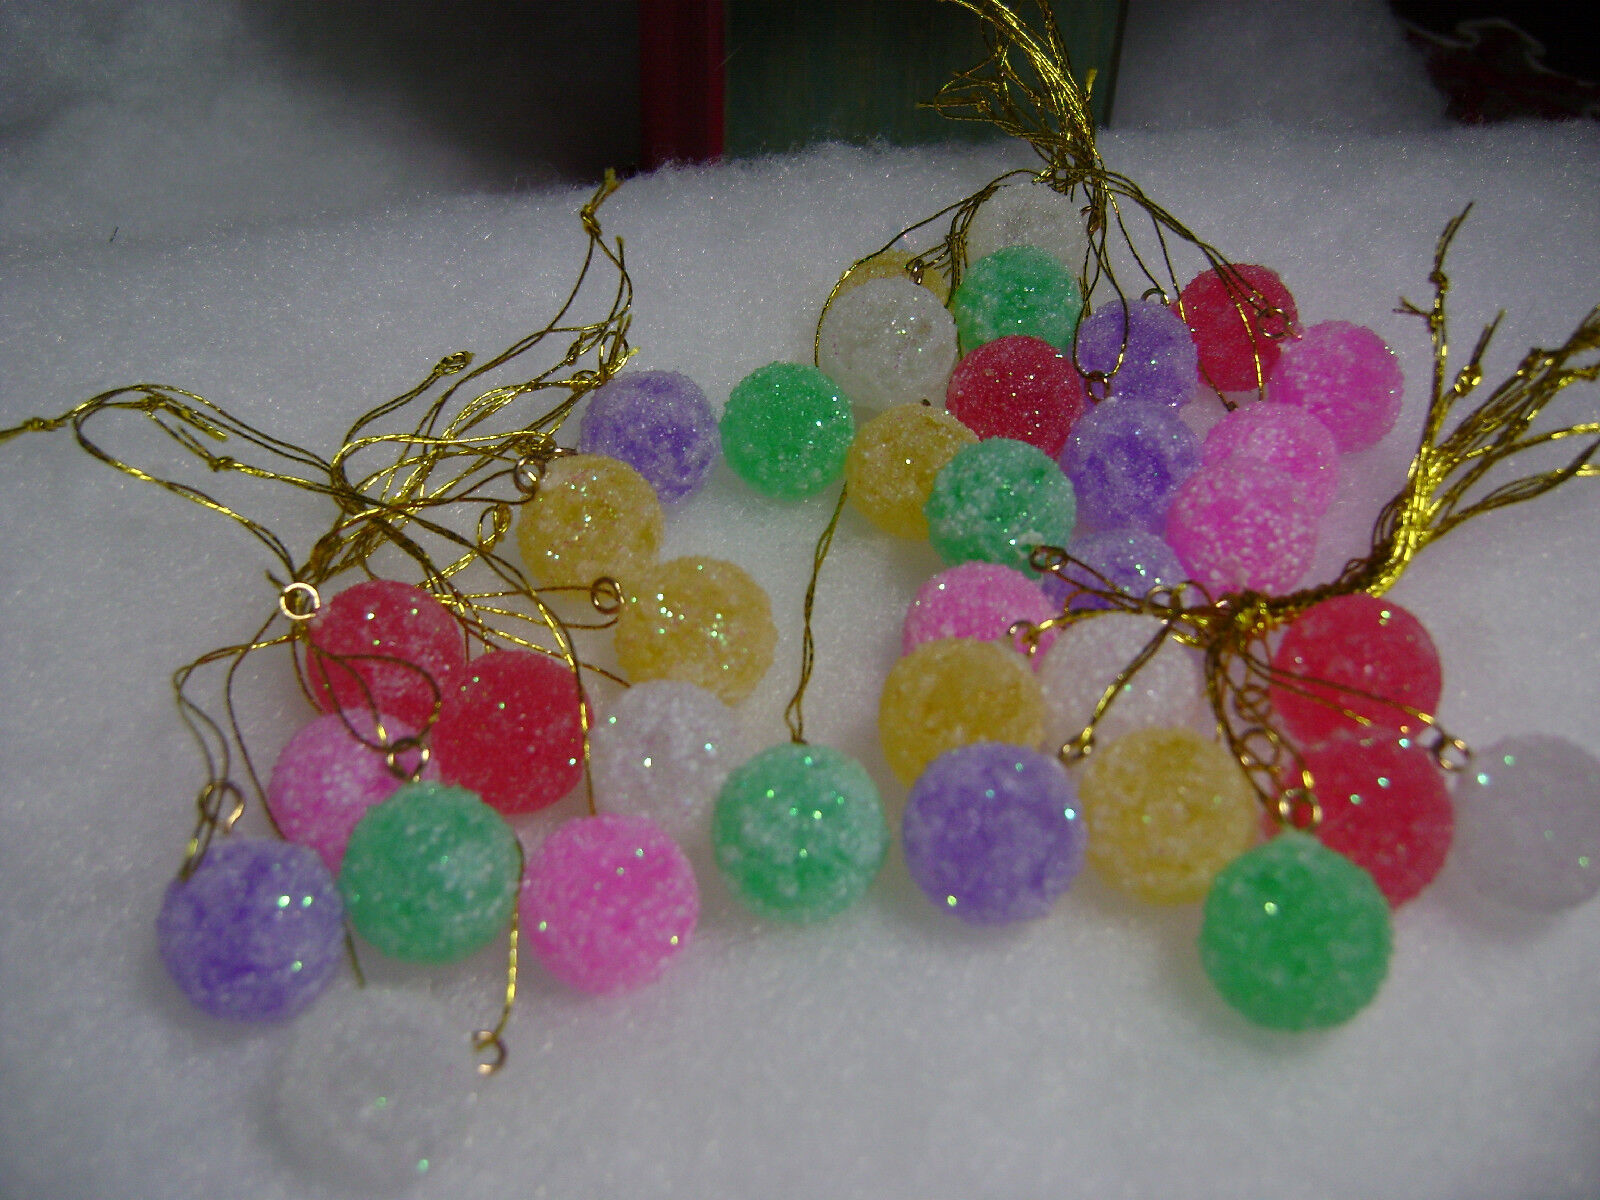 Gumdrop 36pc Mini Sugar Coated Fake candy Christmas Tree Ornaments crafts